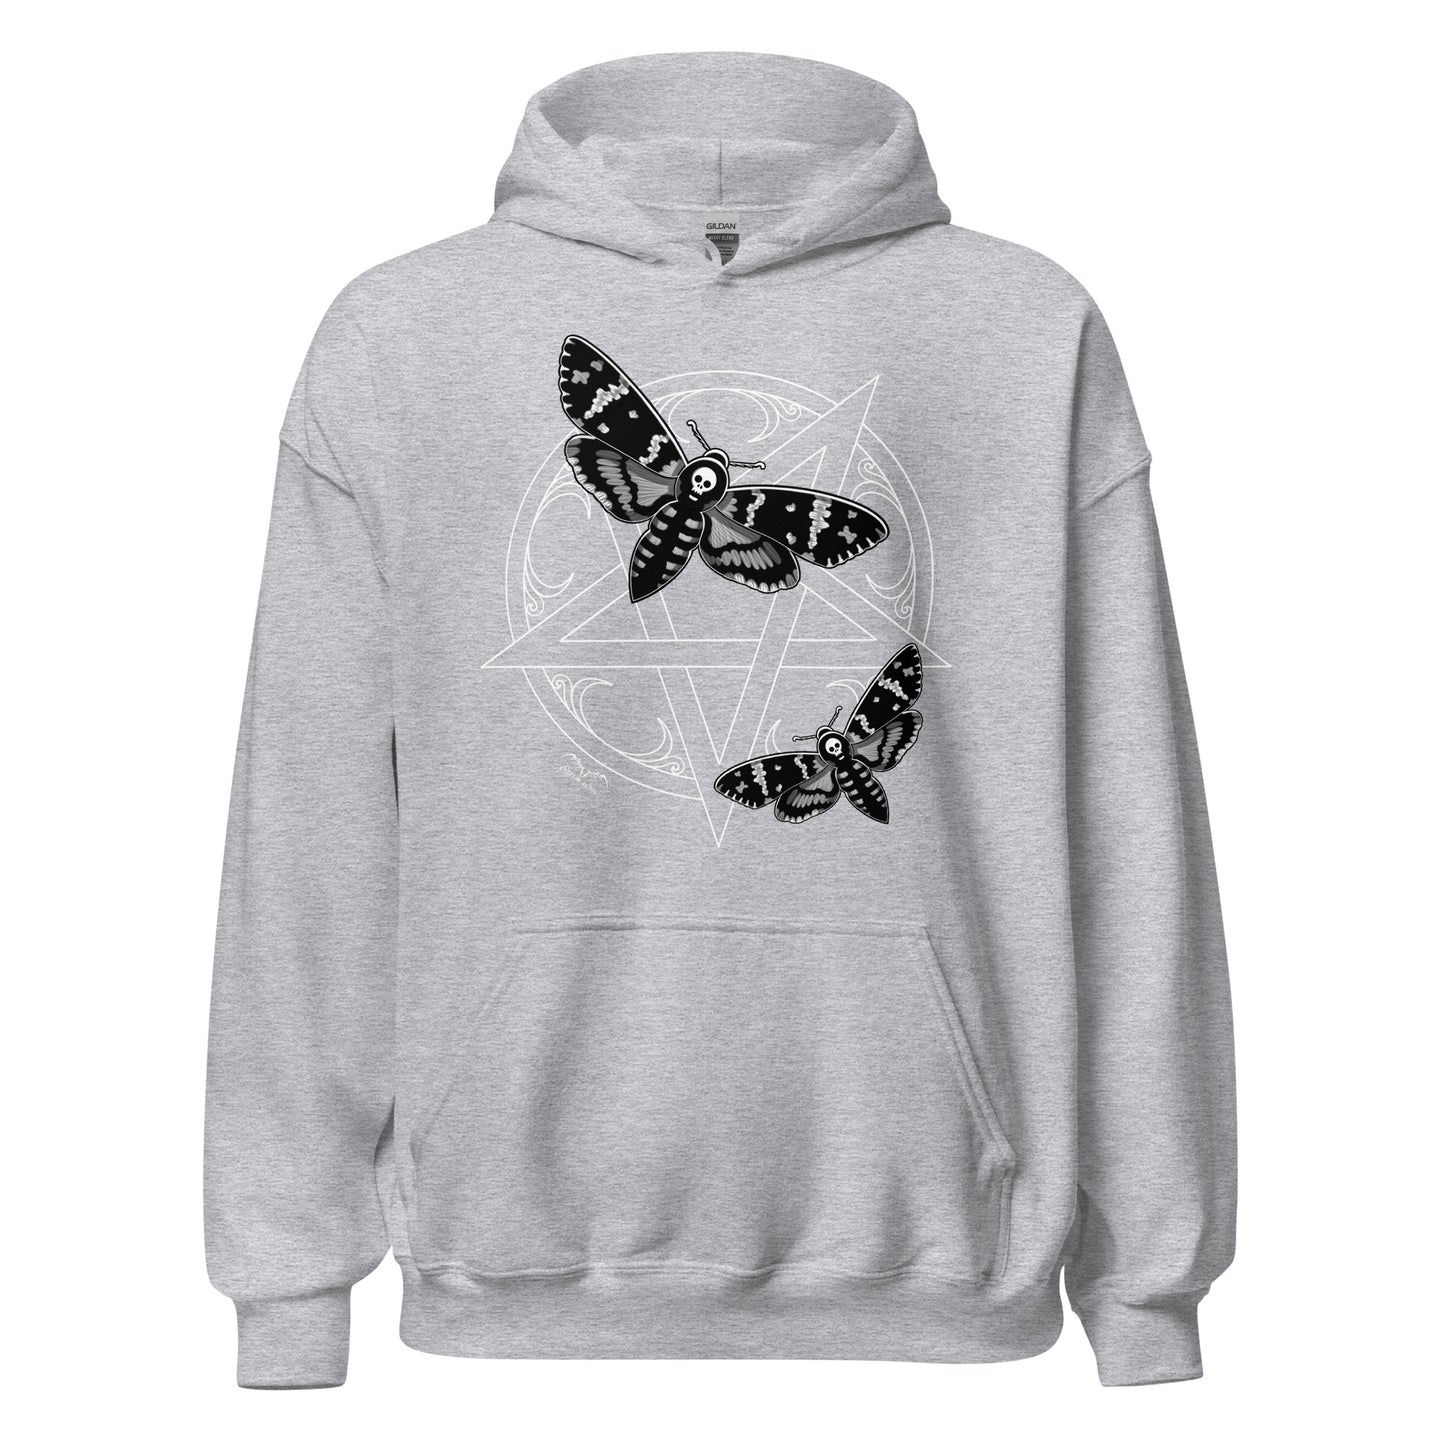 stormseye design deaths head moths hoodie flat view sport grey